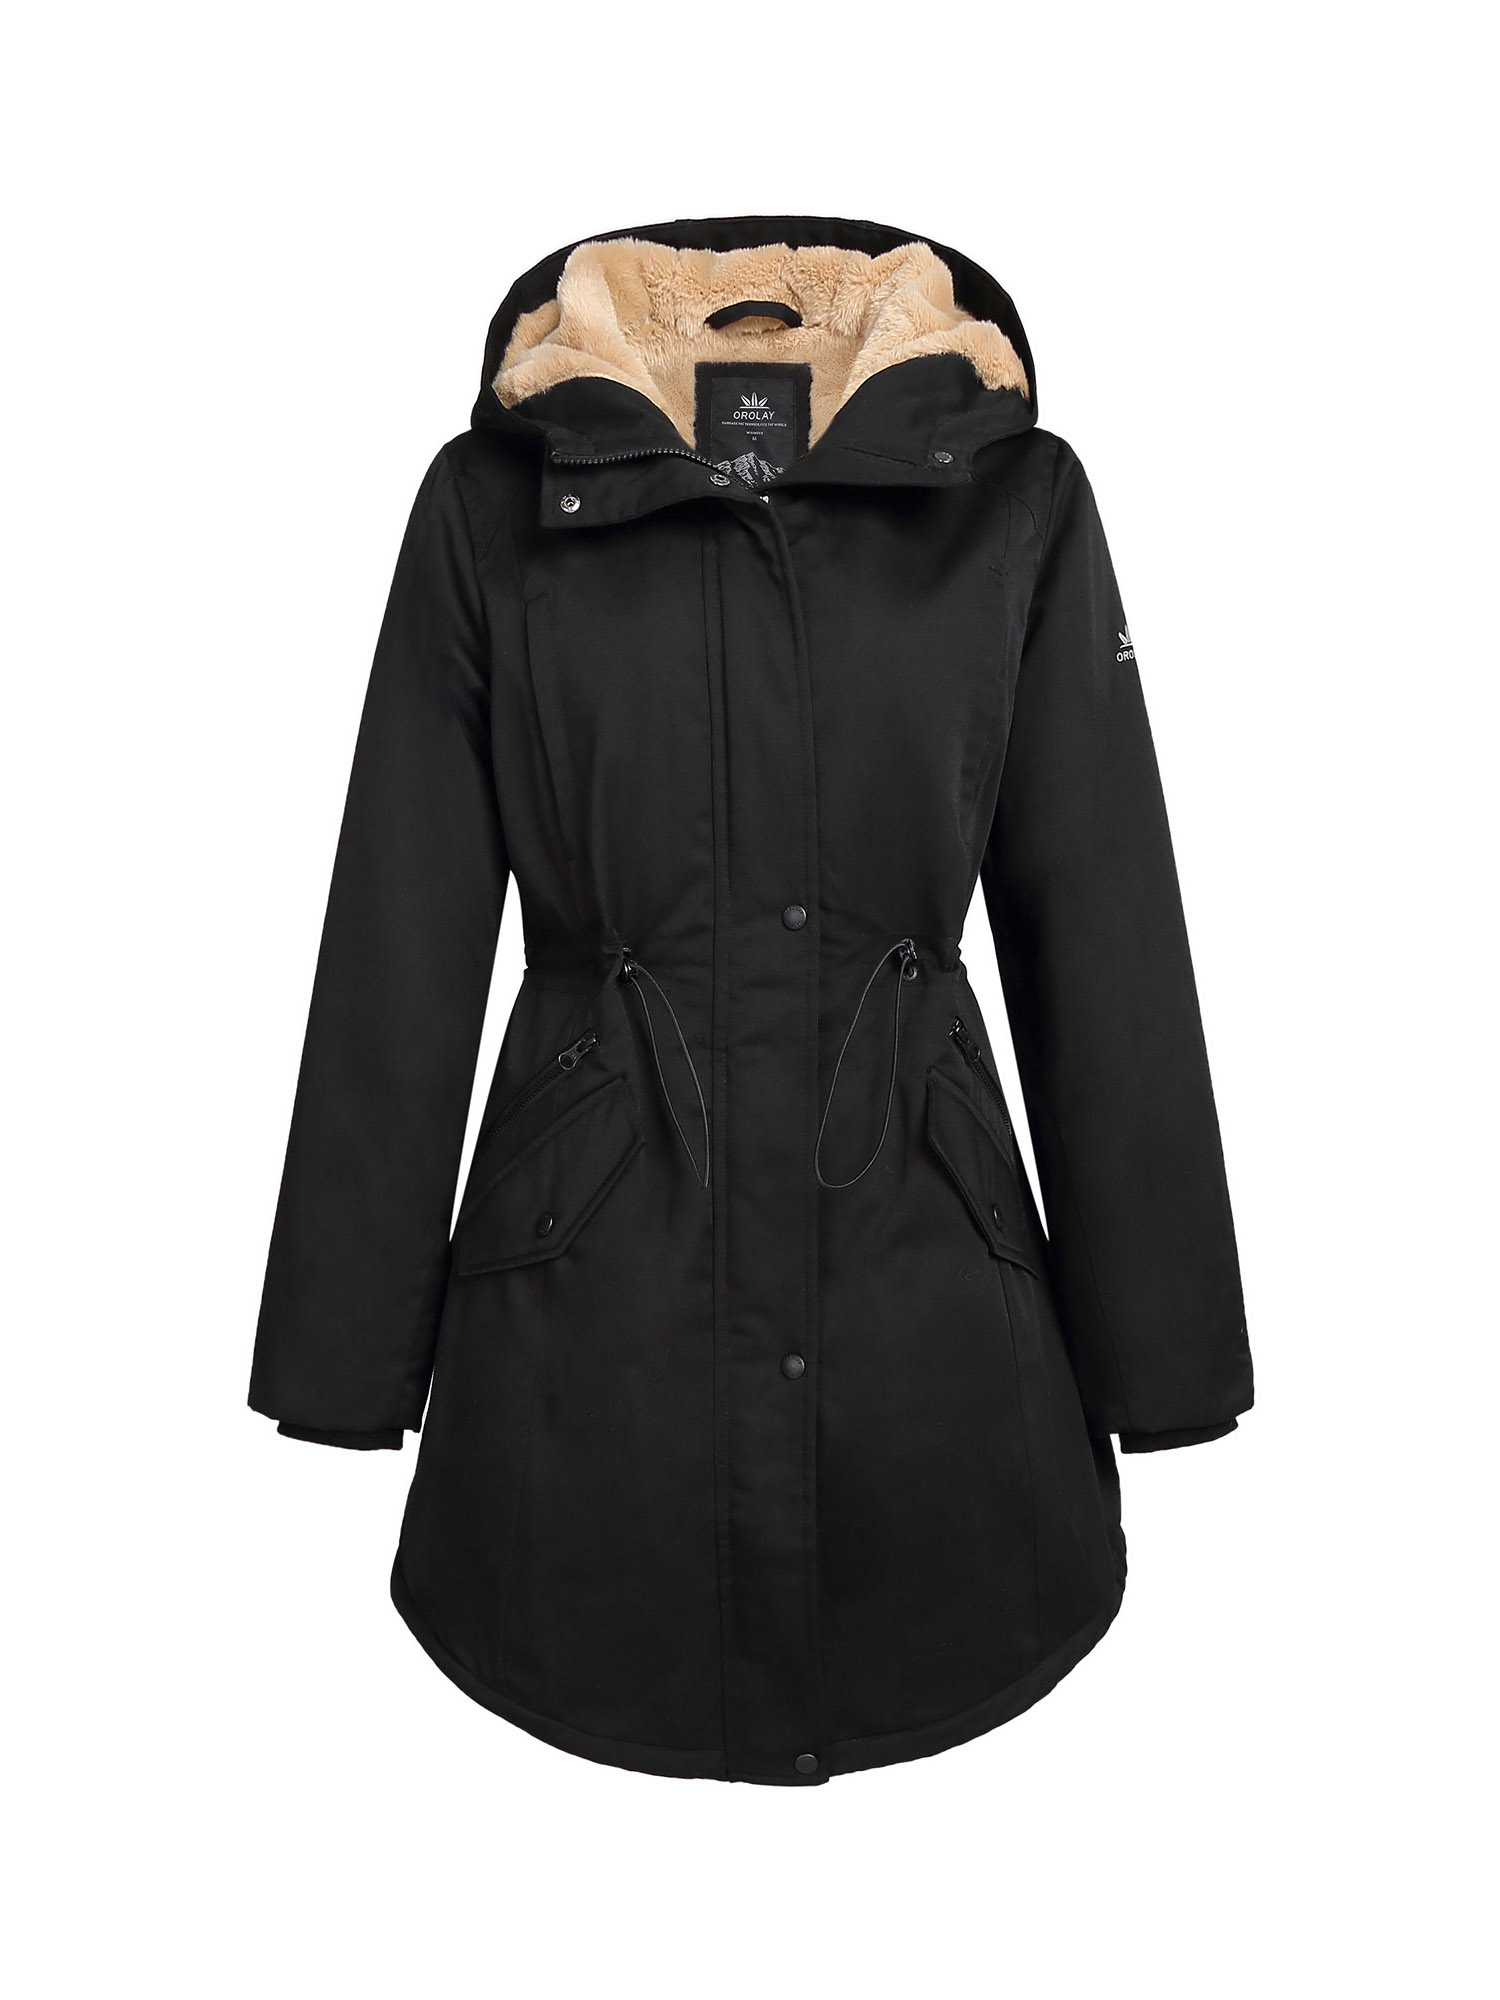 Orolay Women's Winter Parka Fleece Parka Warm Winter Coat Hoodie Jacket Mid length Winter Jacket Black S - image 1 of 5